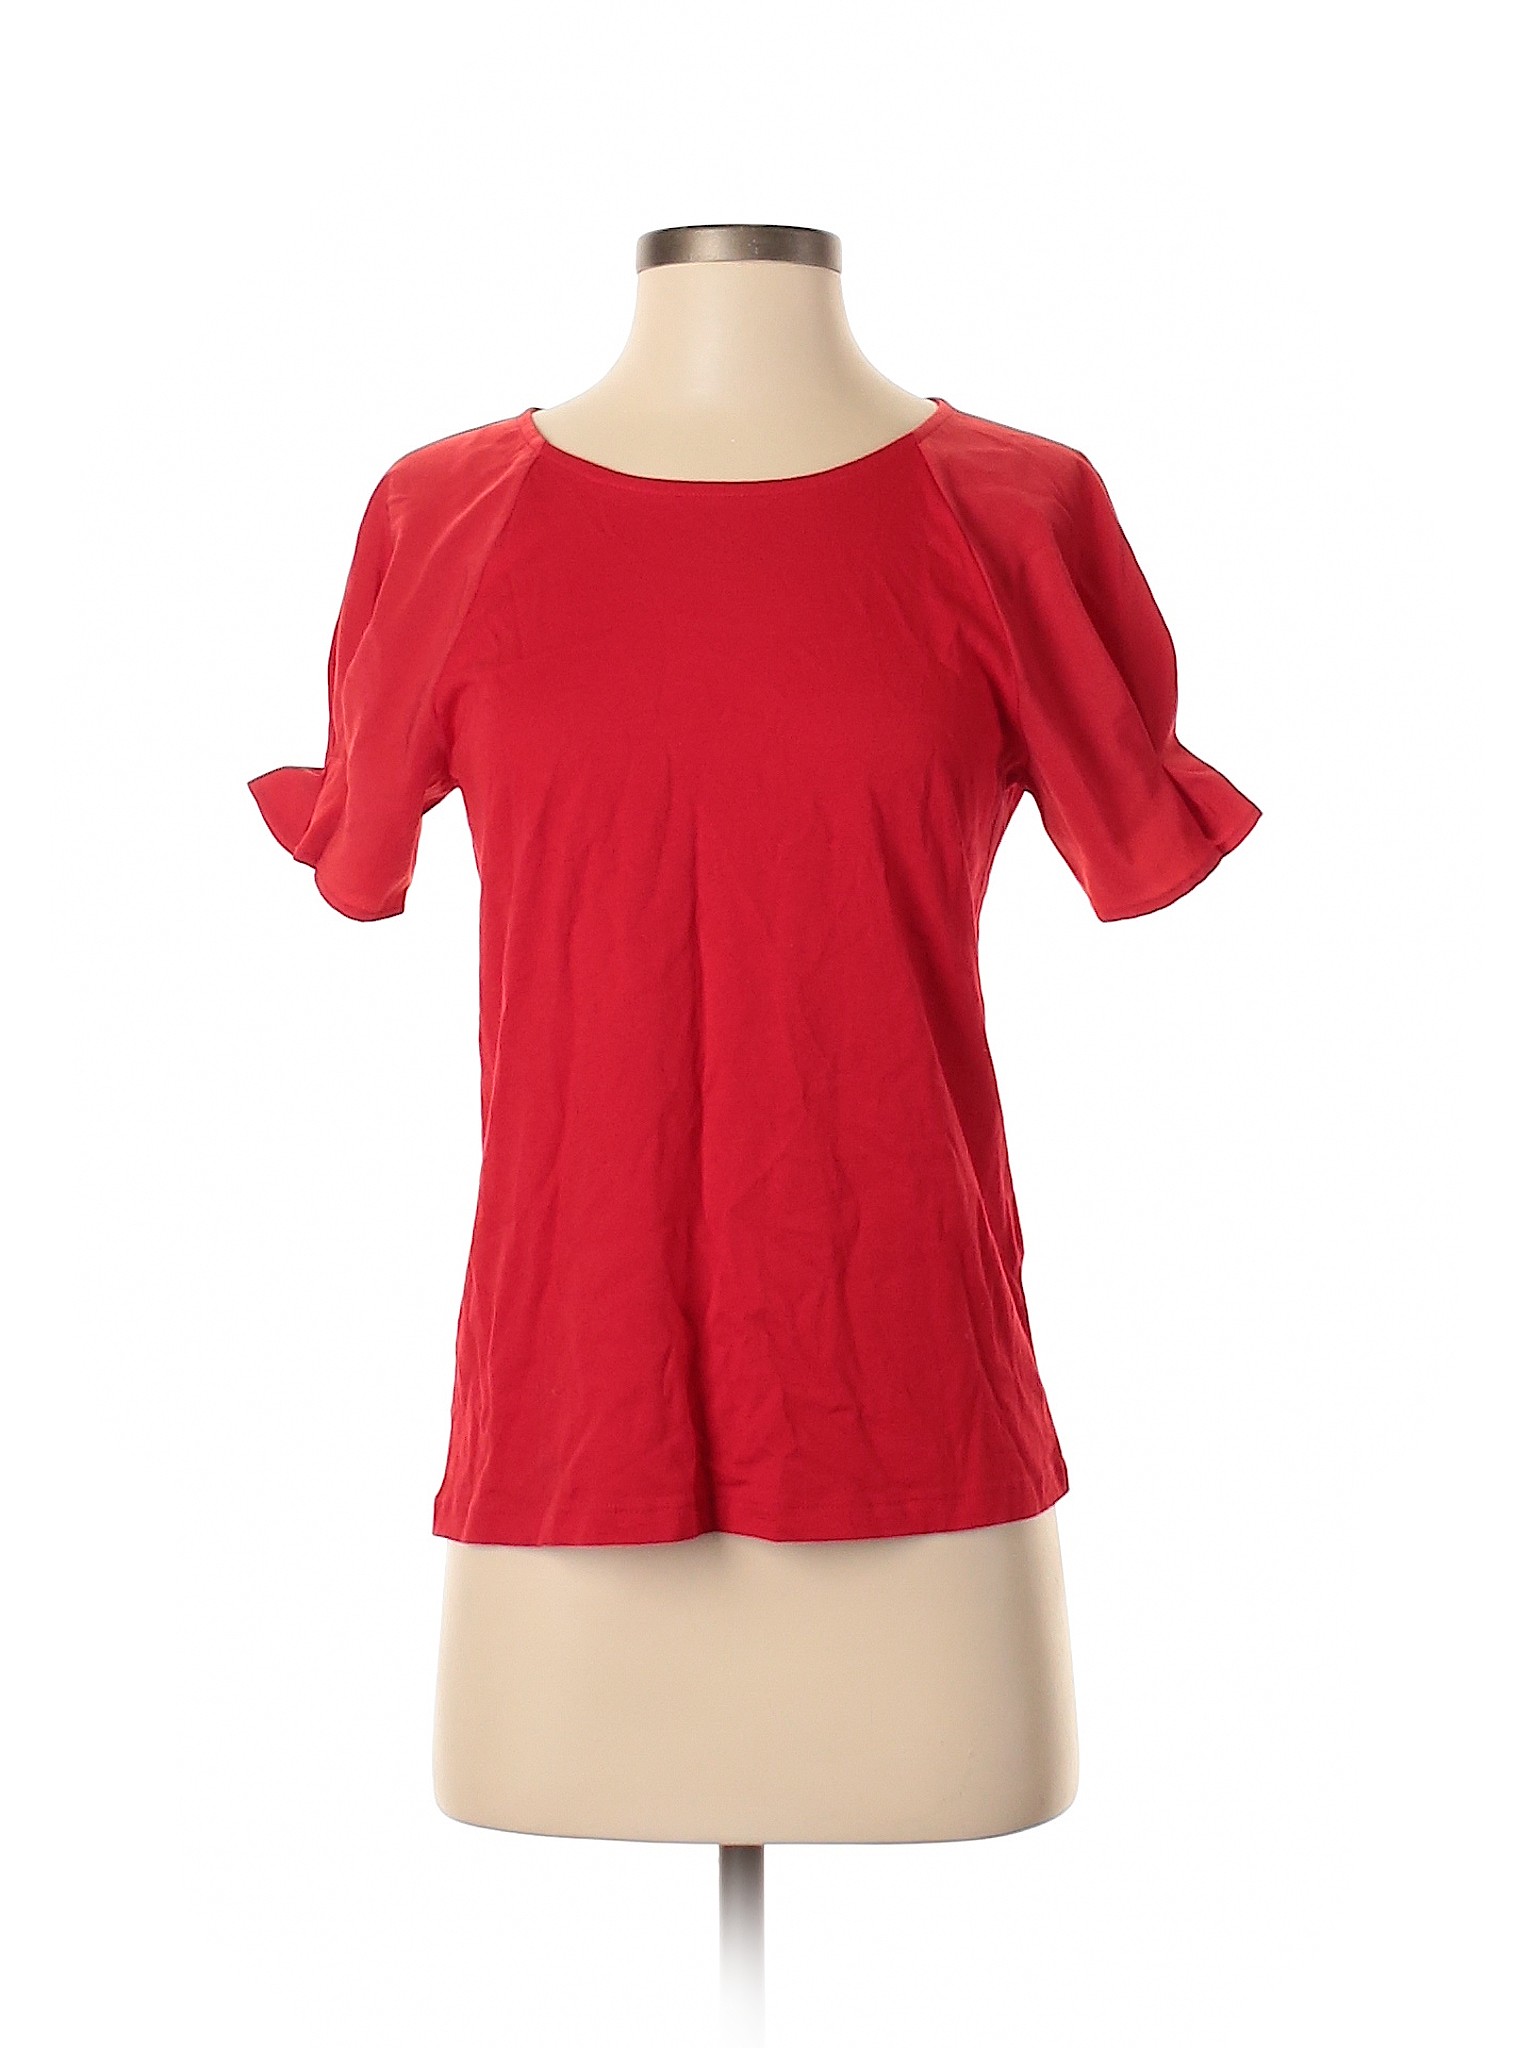 Banana Republic Factory Store Women Red Short Sleeve Blouse XS | eBay